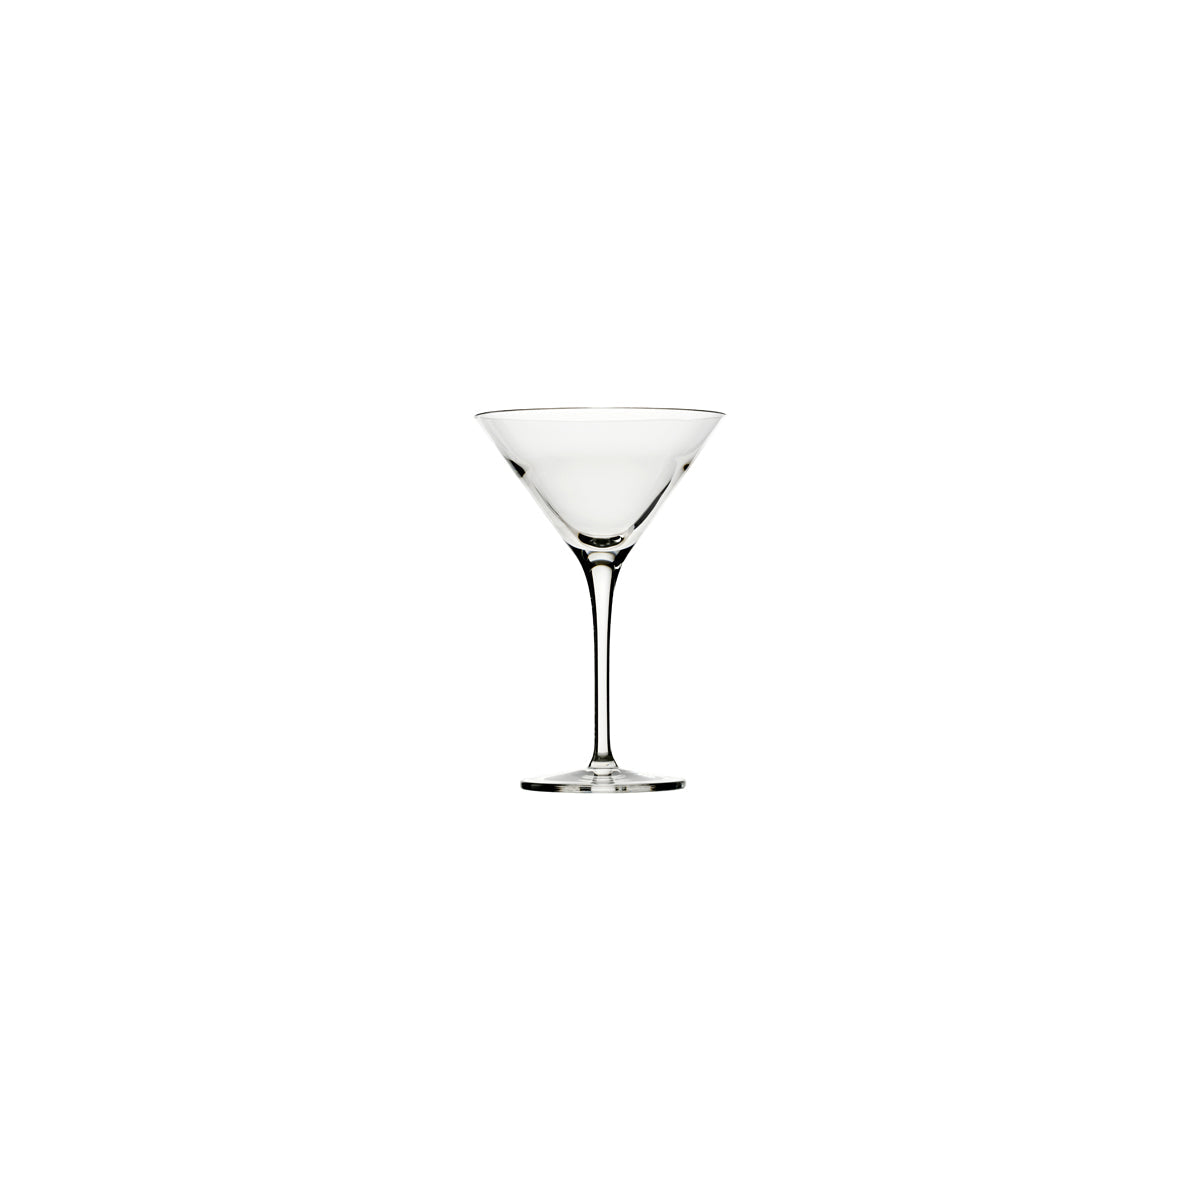 360-942 Stolzle Grandezza Martini / Cocktail 240ml Tomkin Australia Hospitality Supplies